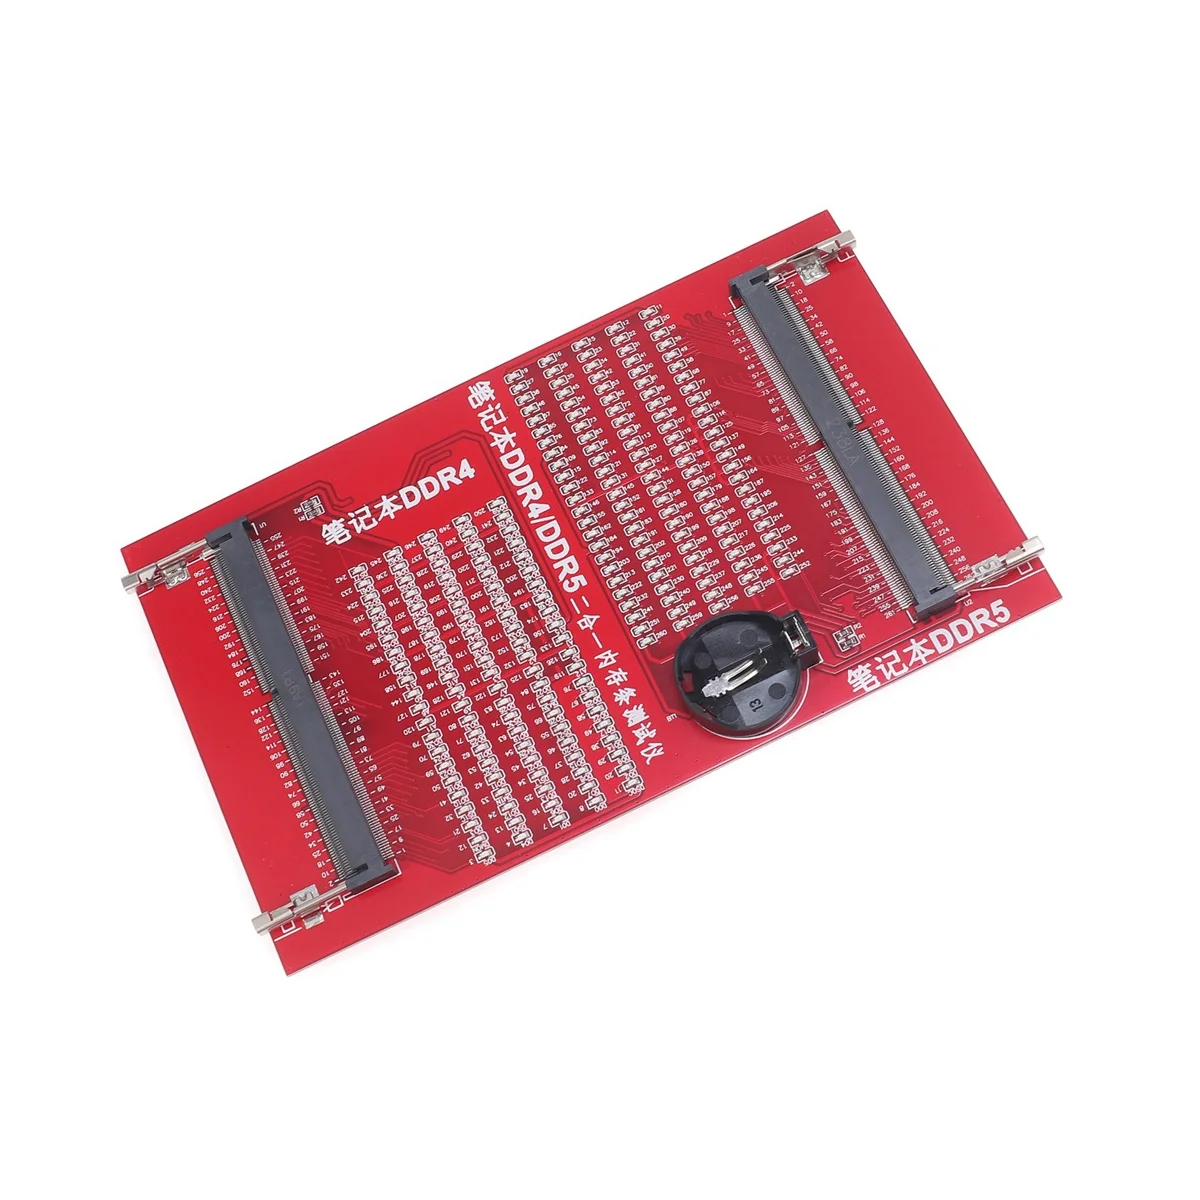 

Слот памяти для материнской платы ноутбука DDR4 5 диагностический анализатор ремонта тест SDRAM SO-DIMM Pin Out